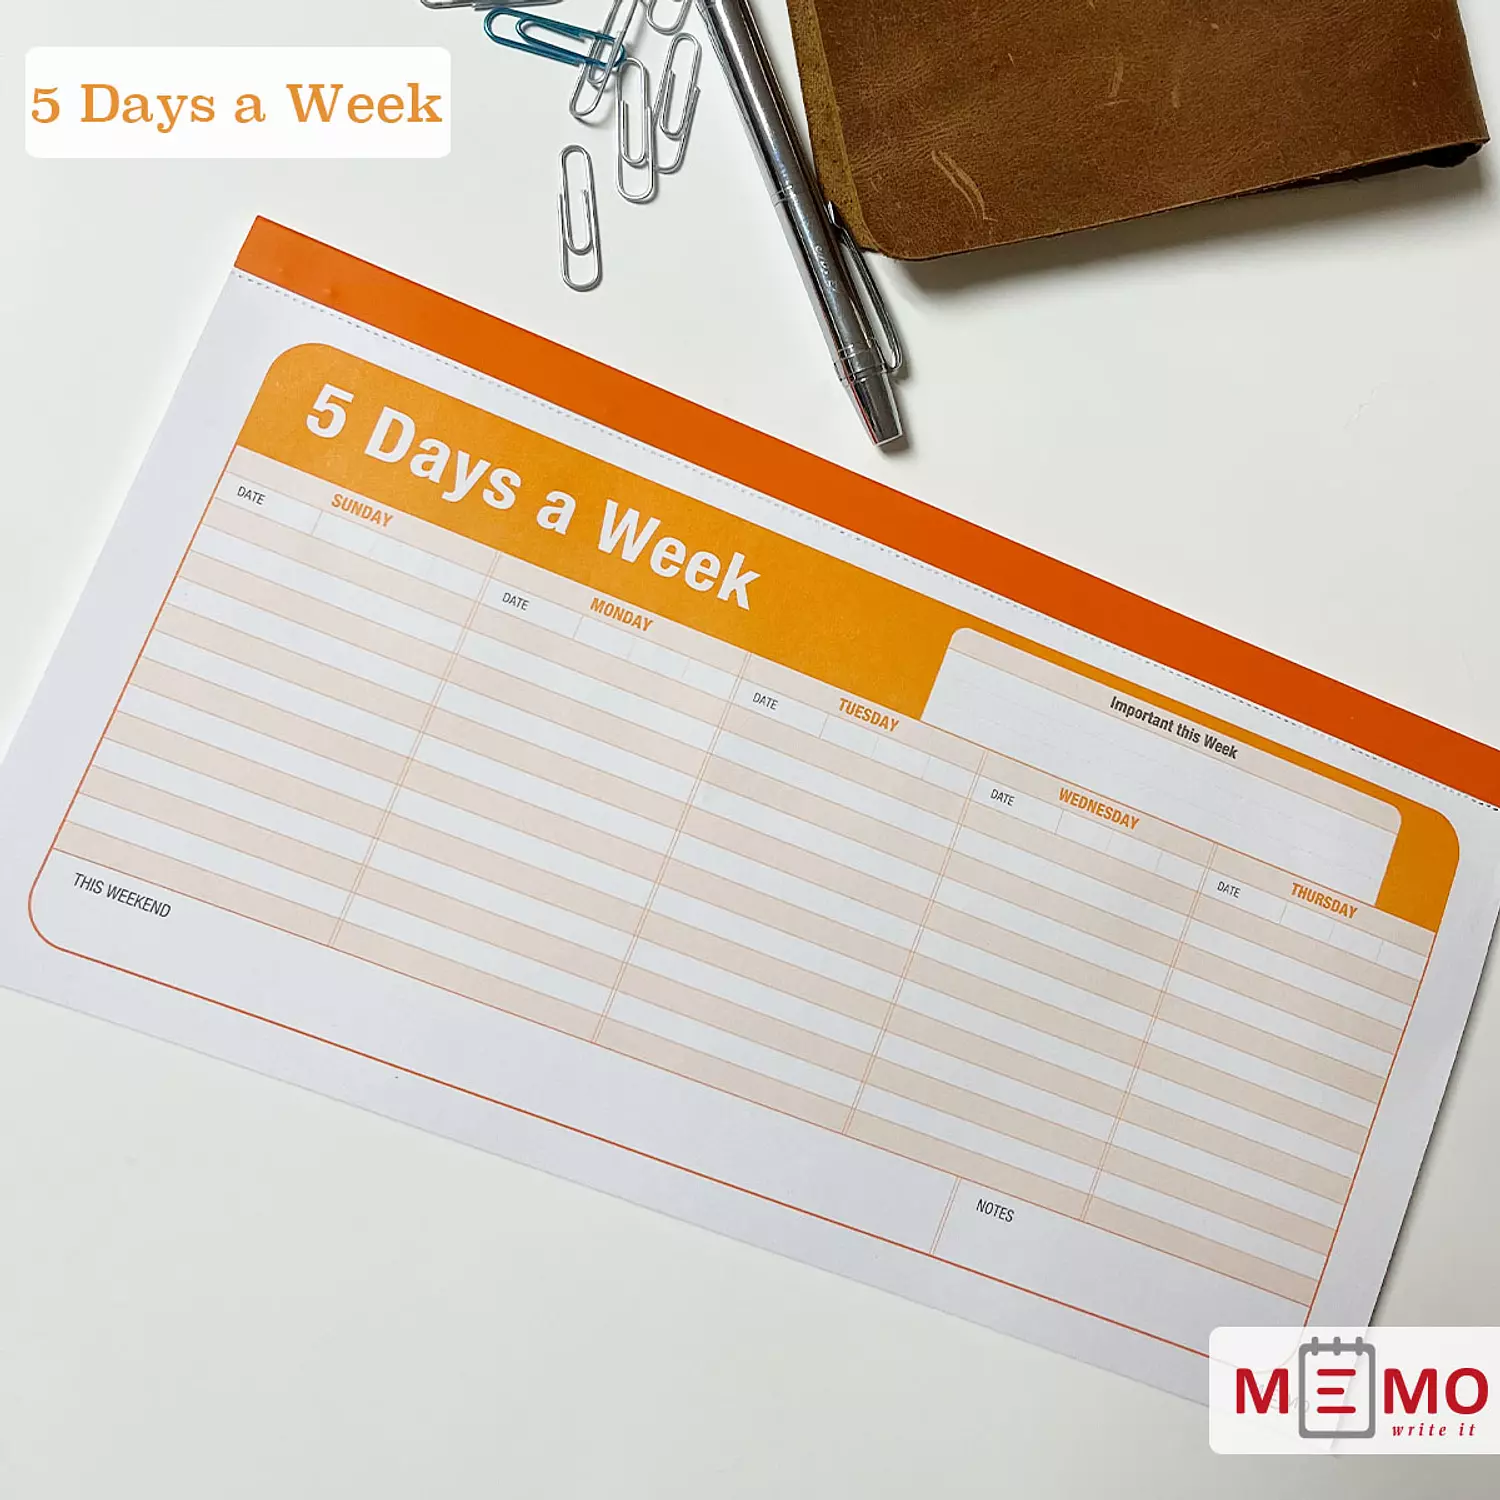  Memo 5 days a week 0